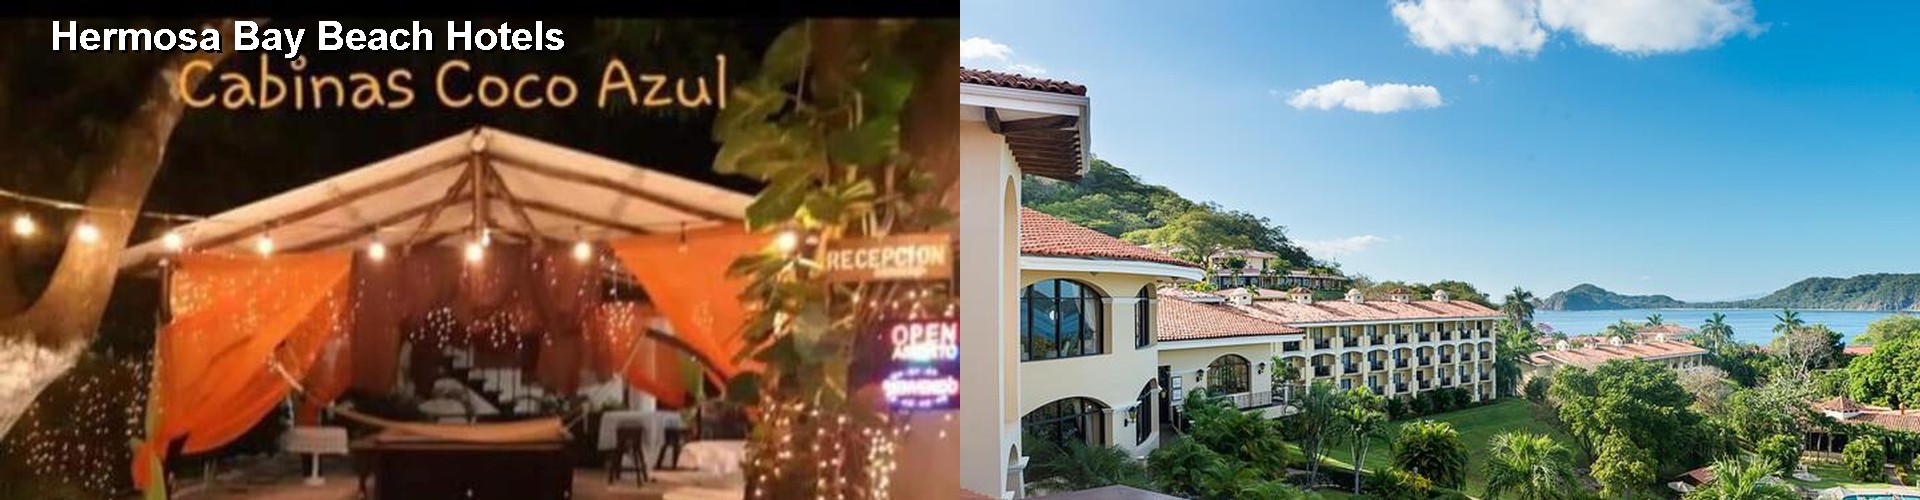 5 Best Hotels near Hermosa Bay Beach